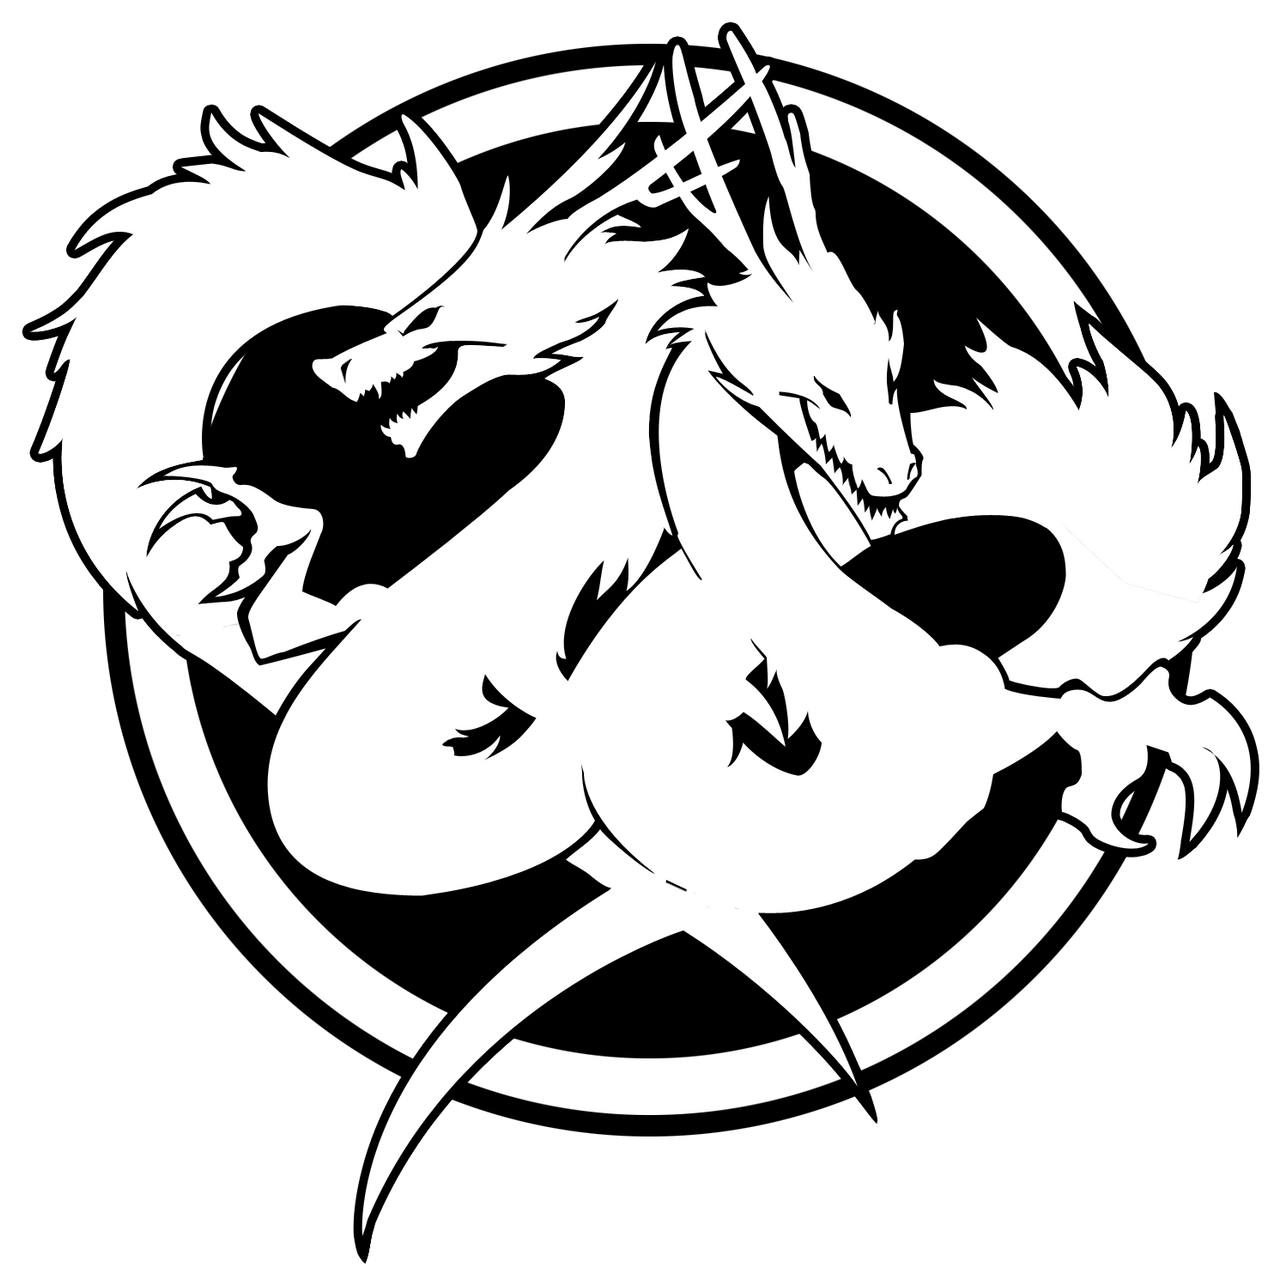 double_dragon_neon_logo___symbol_by_reoer-d6epdxx.png